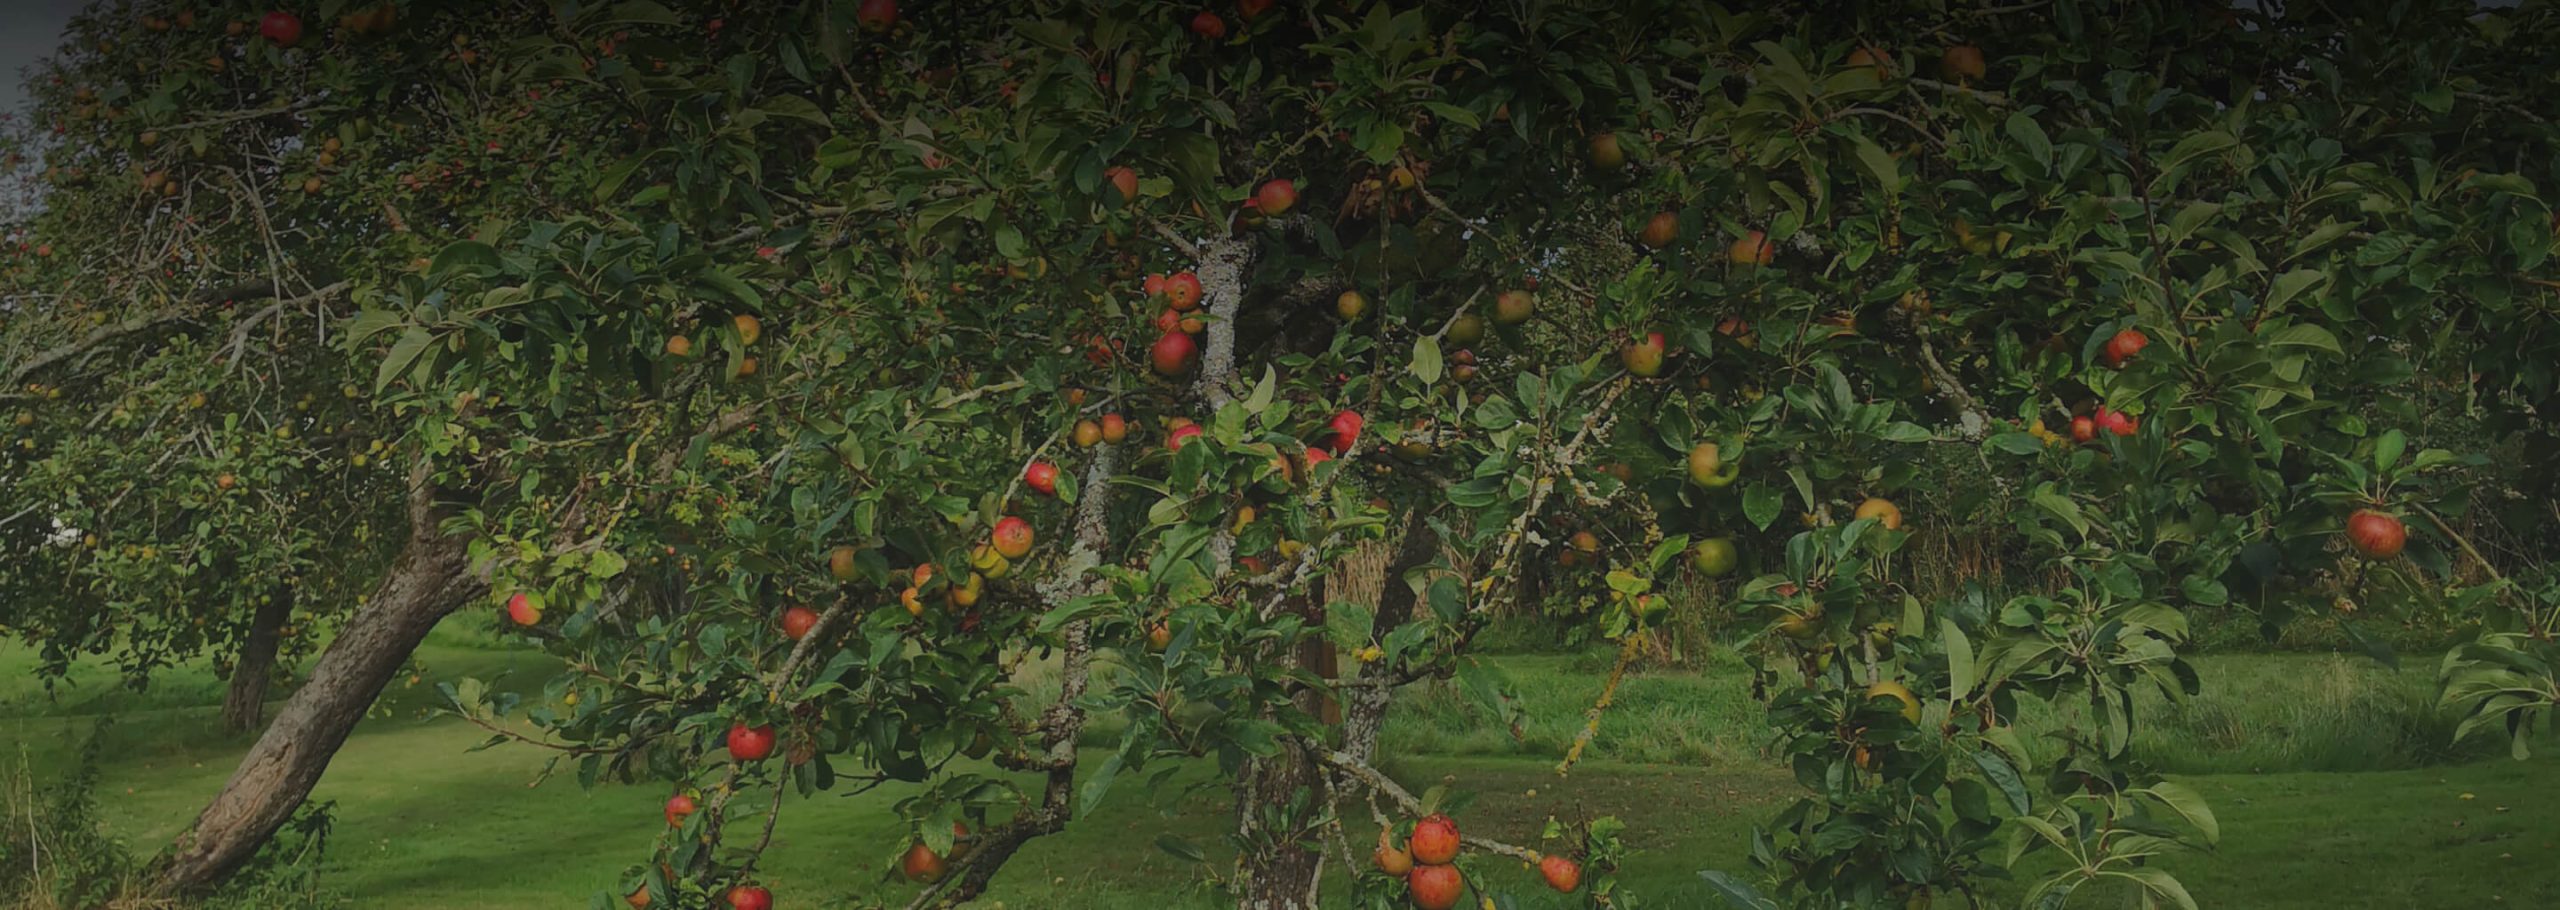 Dowdings apple tree